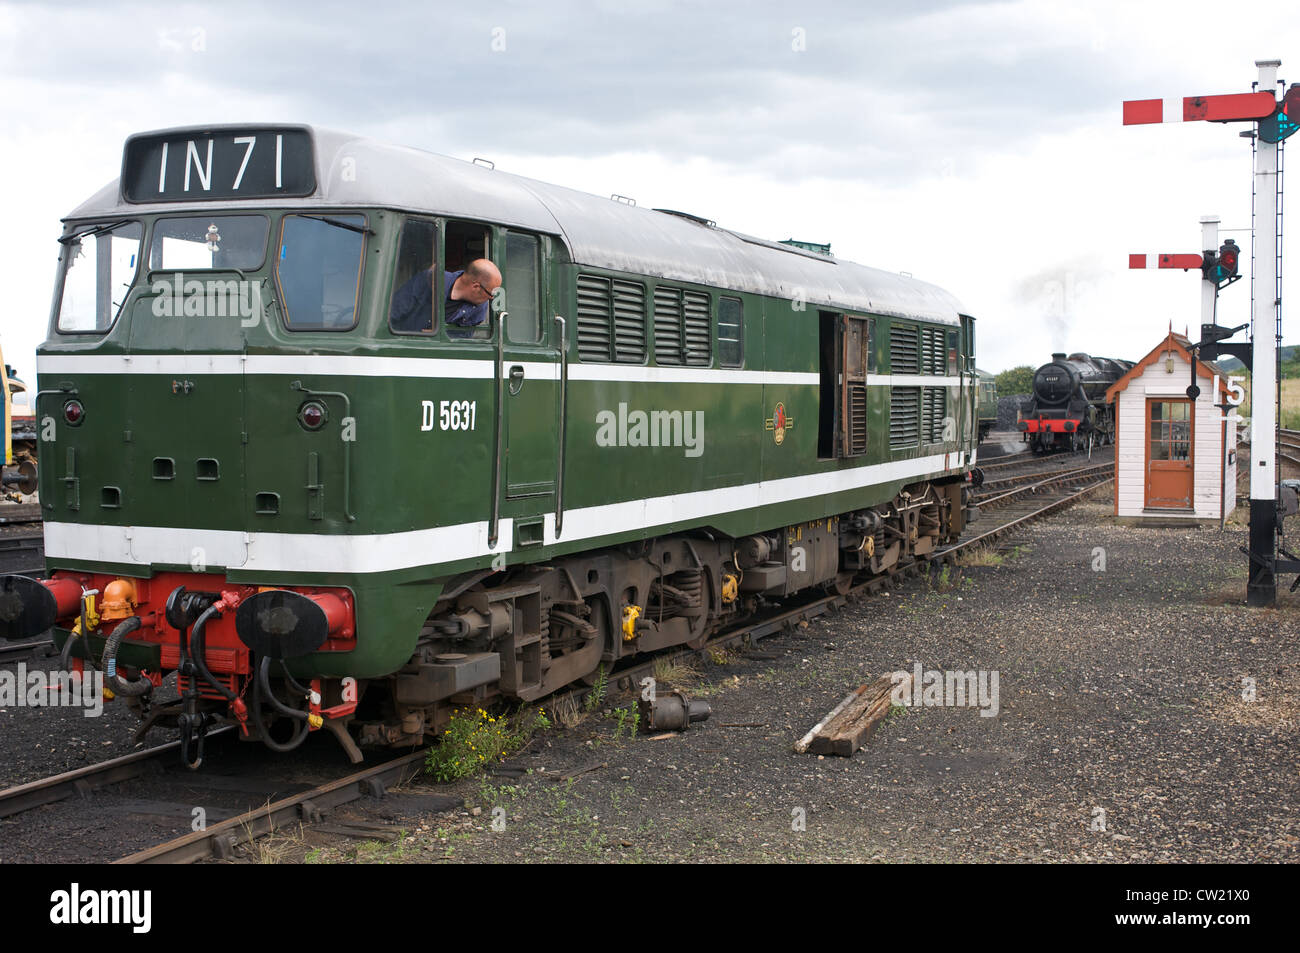 Class 31 (D 5631) diesel locomotive in historic British Rail green livery Stock Photo